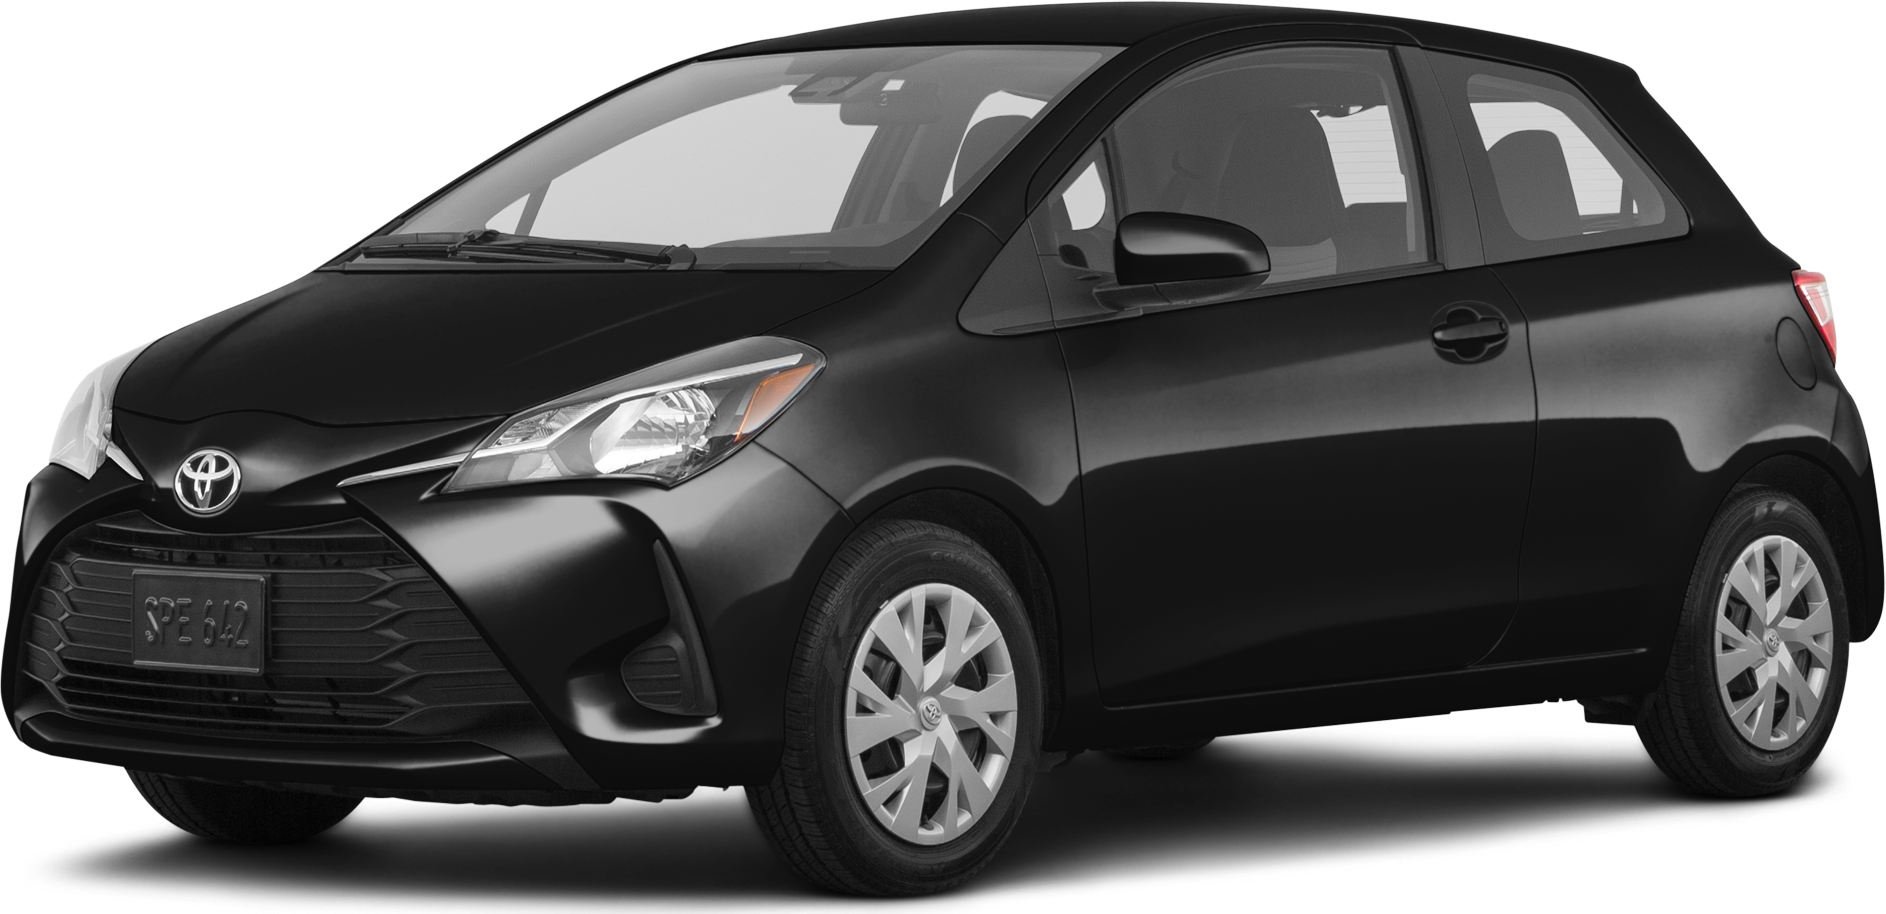 2016 Toyota Yaris Price, Value, Ratings & Reviews